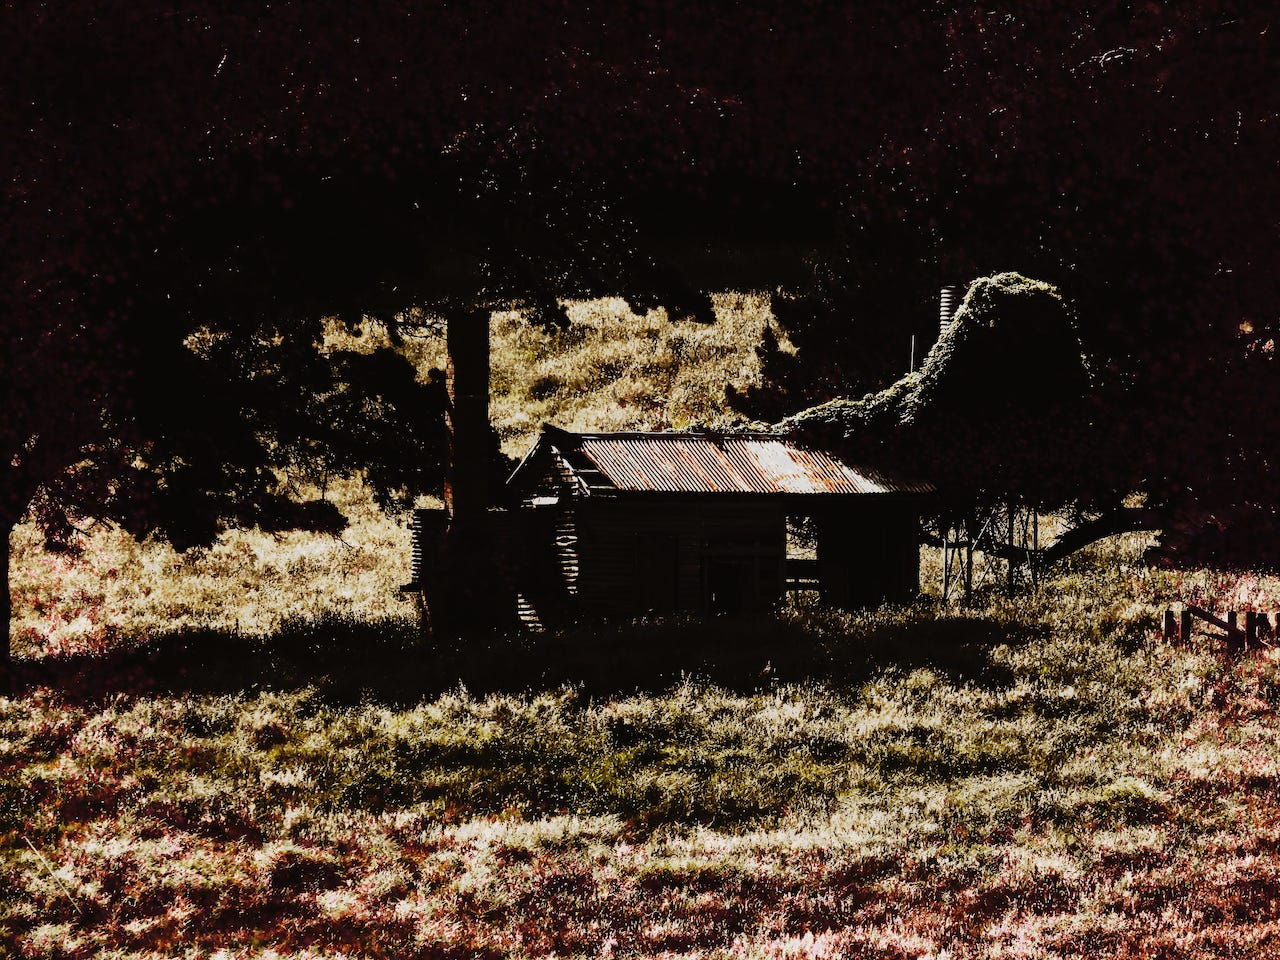 Ruin of an old farmstead on a hillside